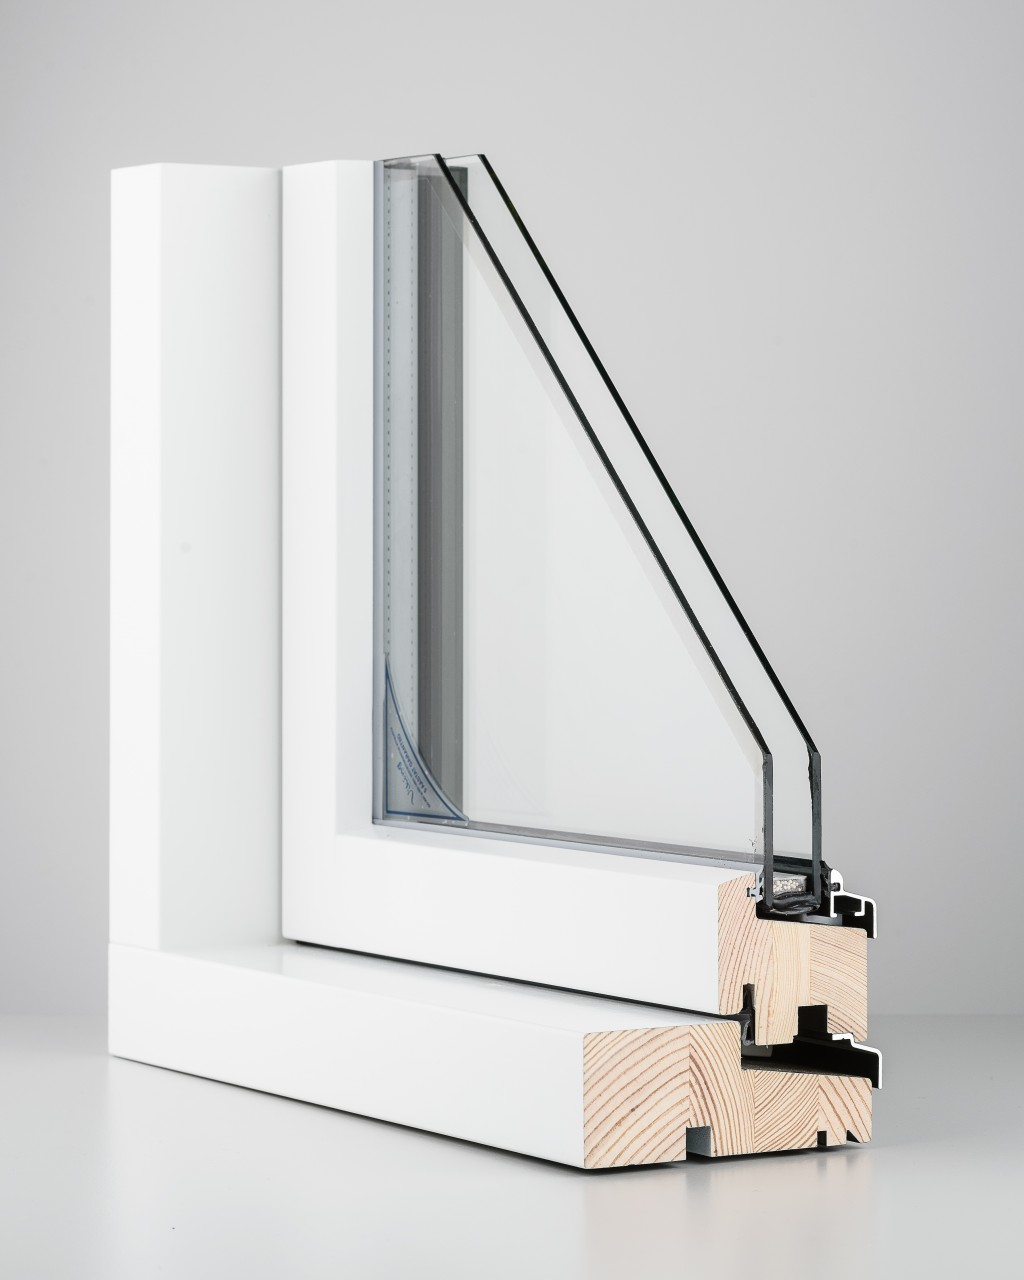 Wooden and Aluclad Windows Double Glazed Outward Opening Viking 12 Uw = 1.2 W/m2K